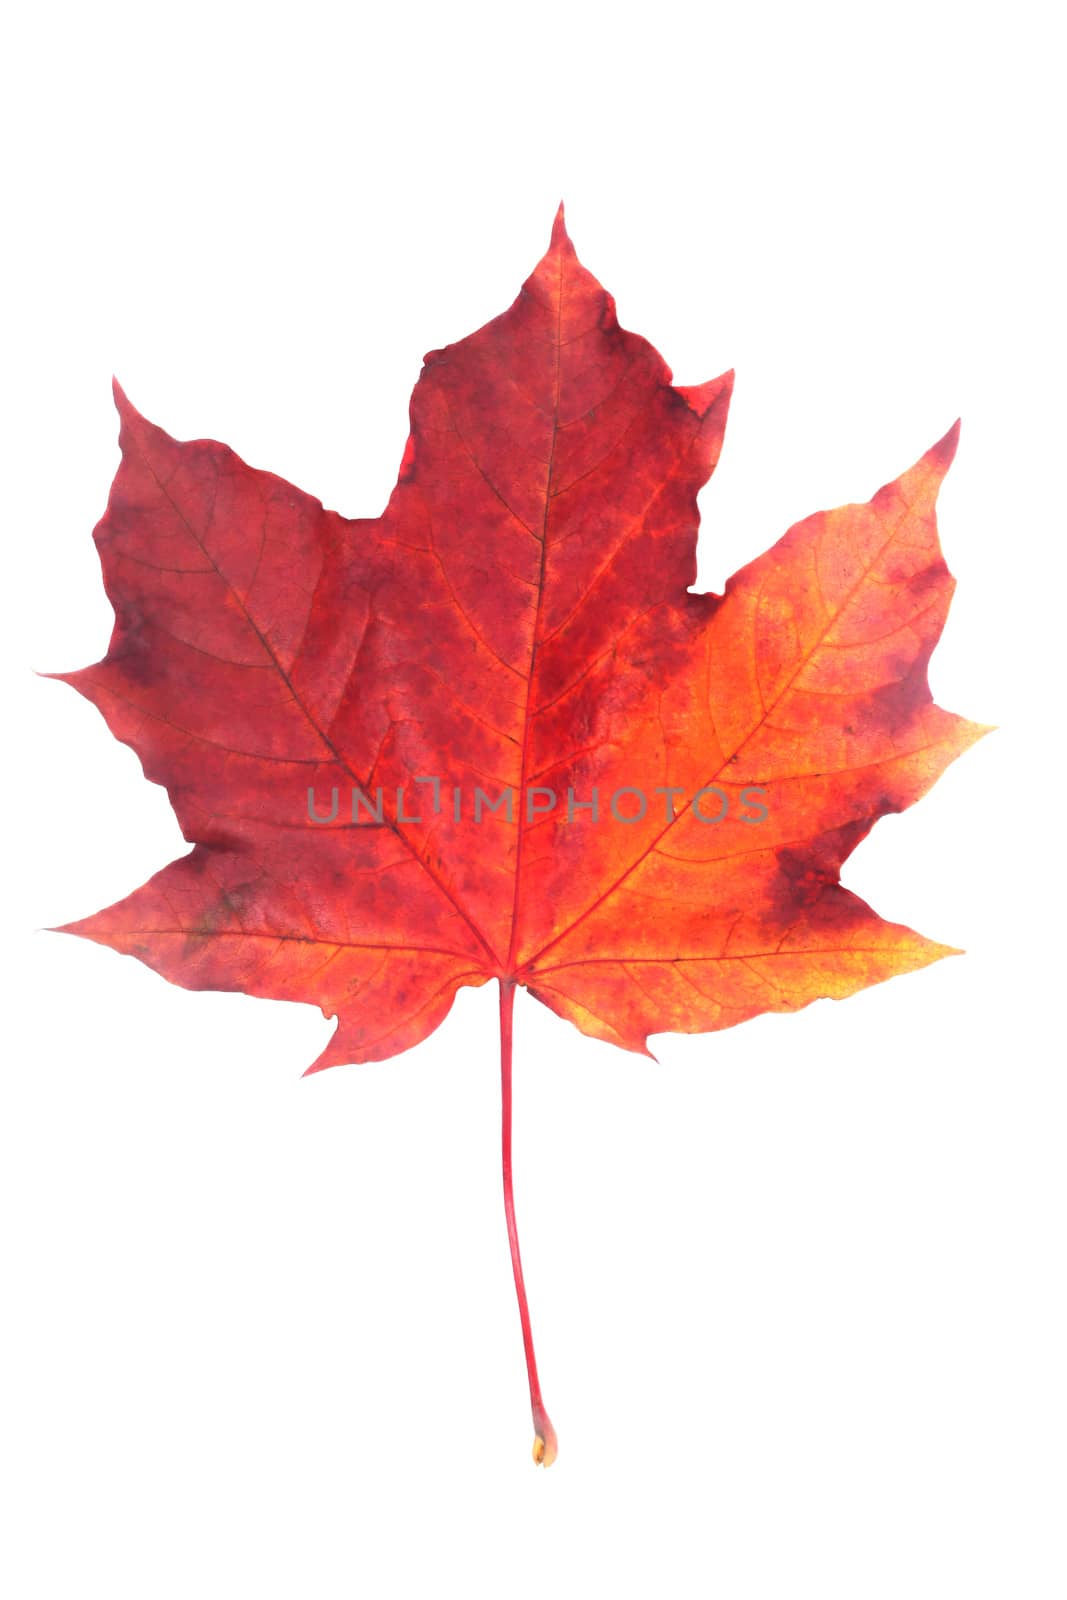 Red maple leaf by destillat